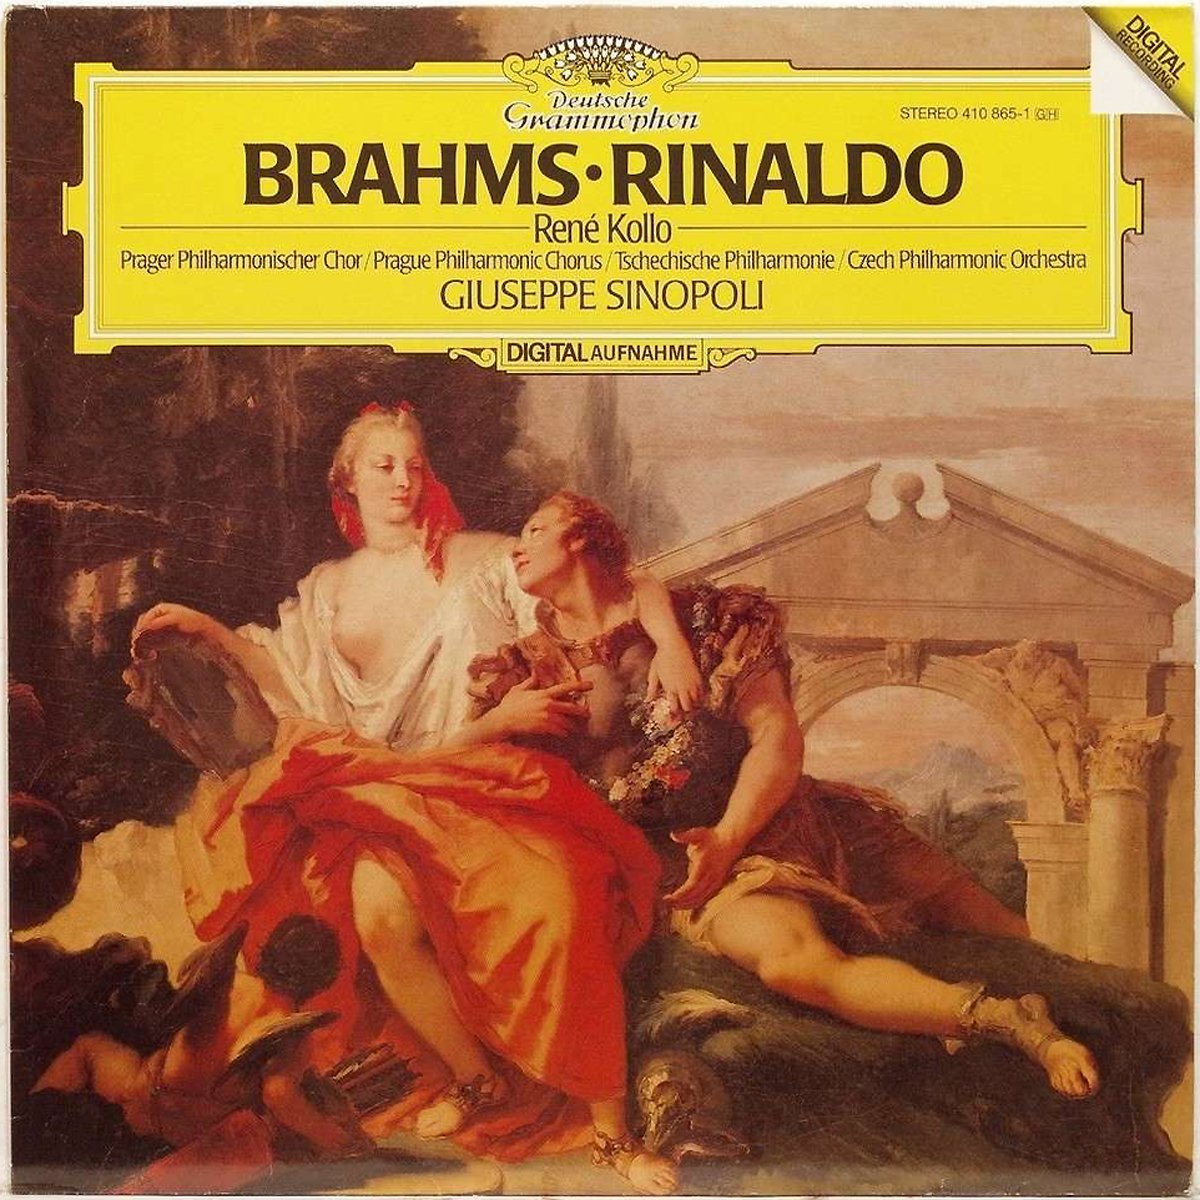 DGG 410 865 Brahms Rinaldo Sinopoli DGG Digital Aufnahme